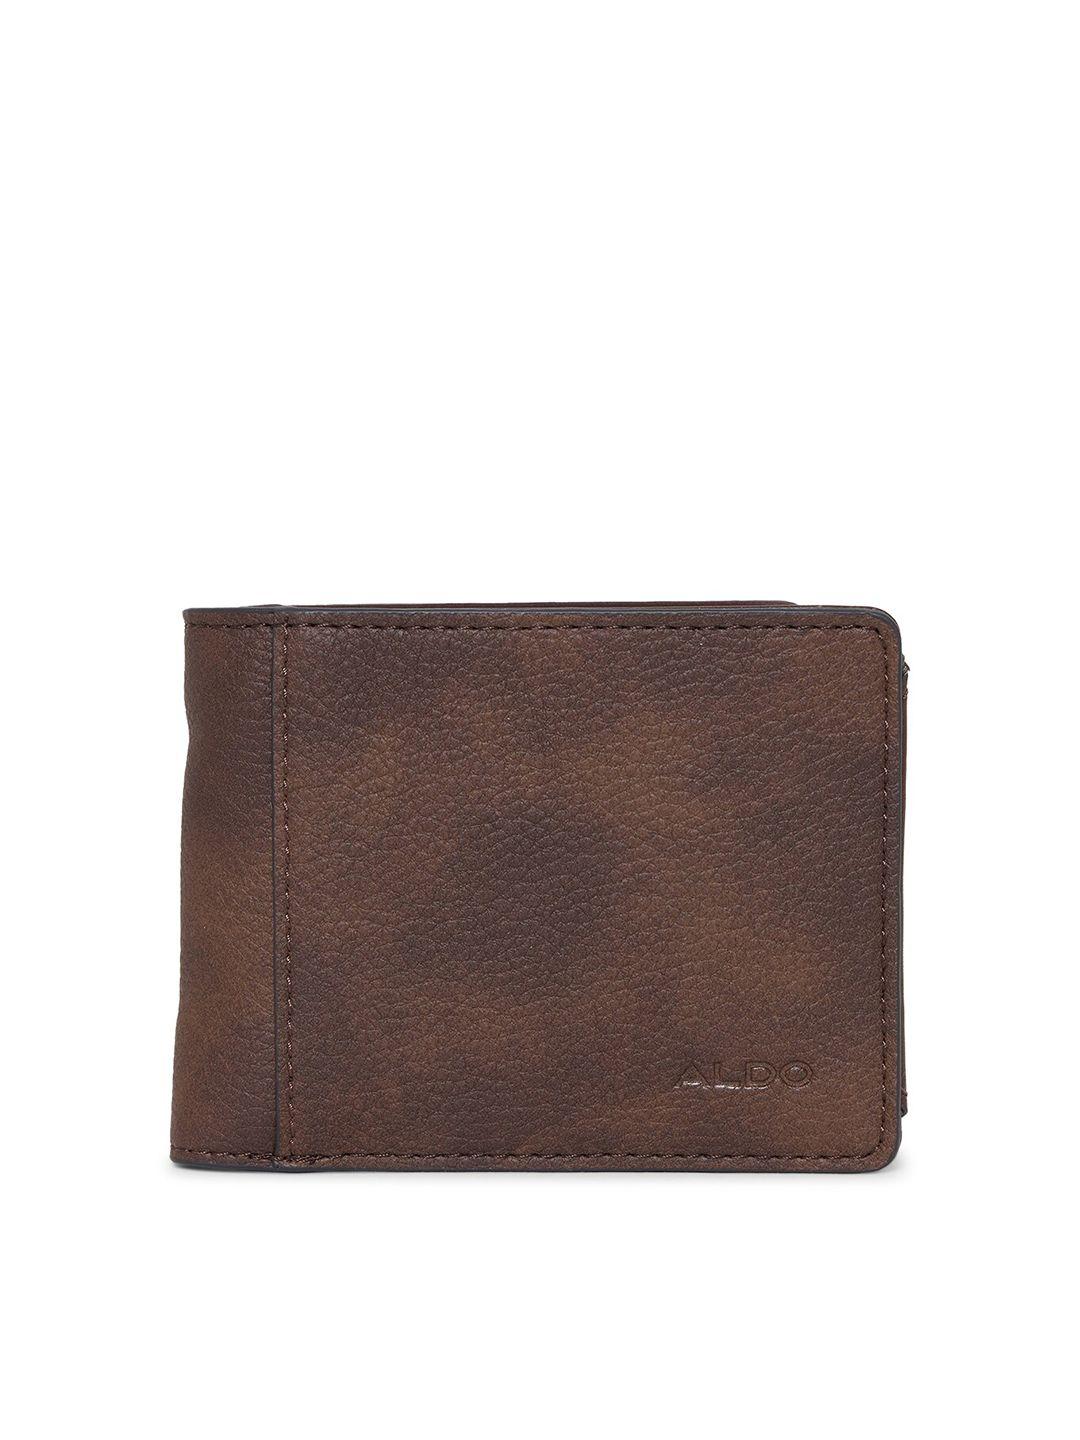 aldo men brown two fold wallet